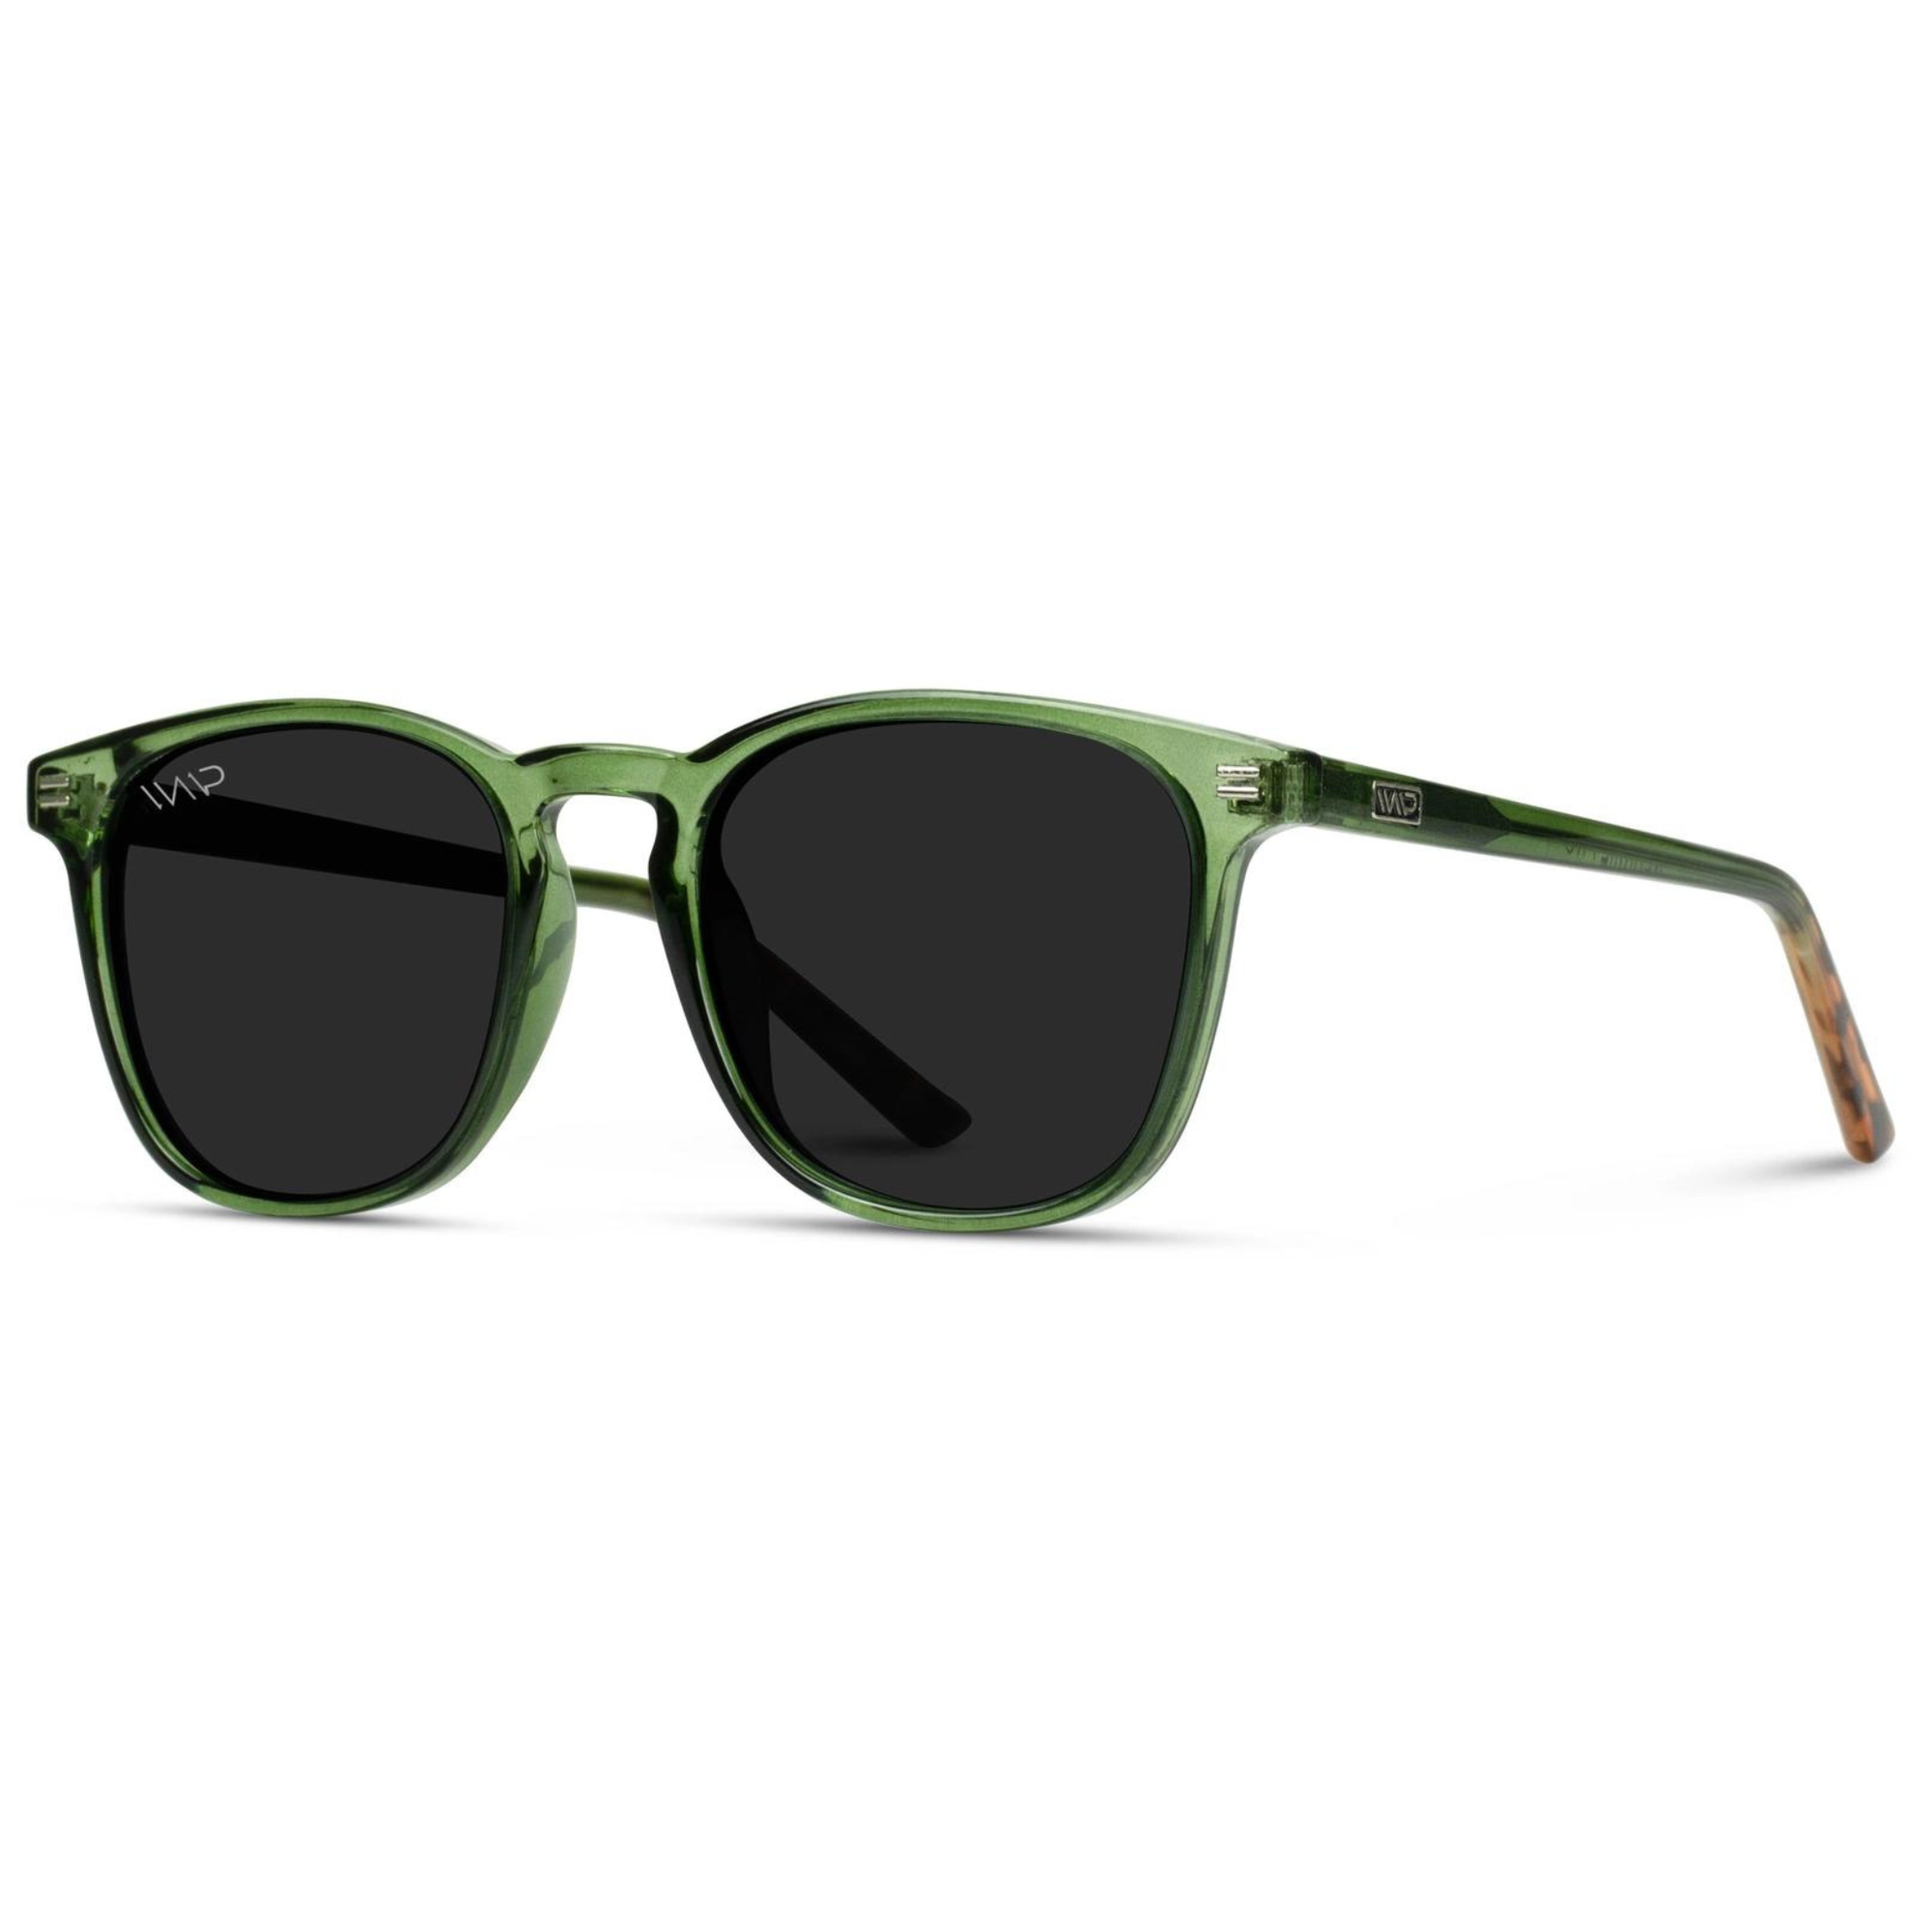 Nick Square Modern Sunglasses